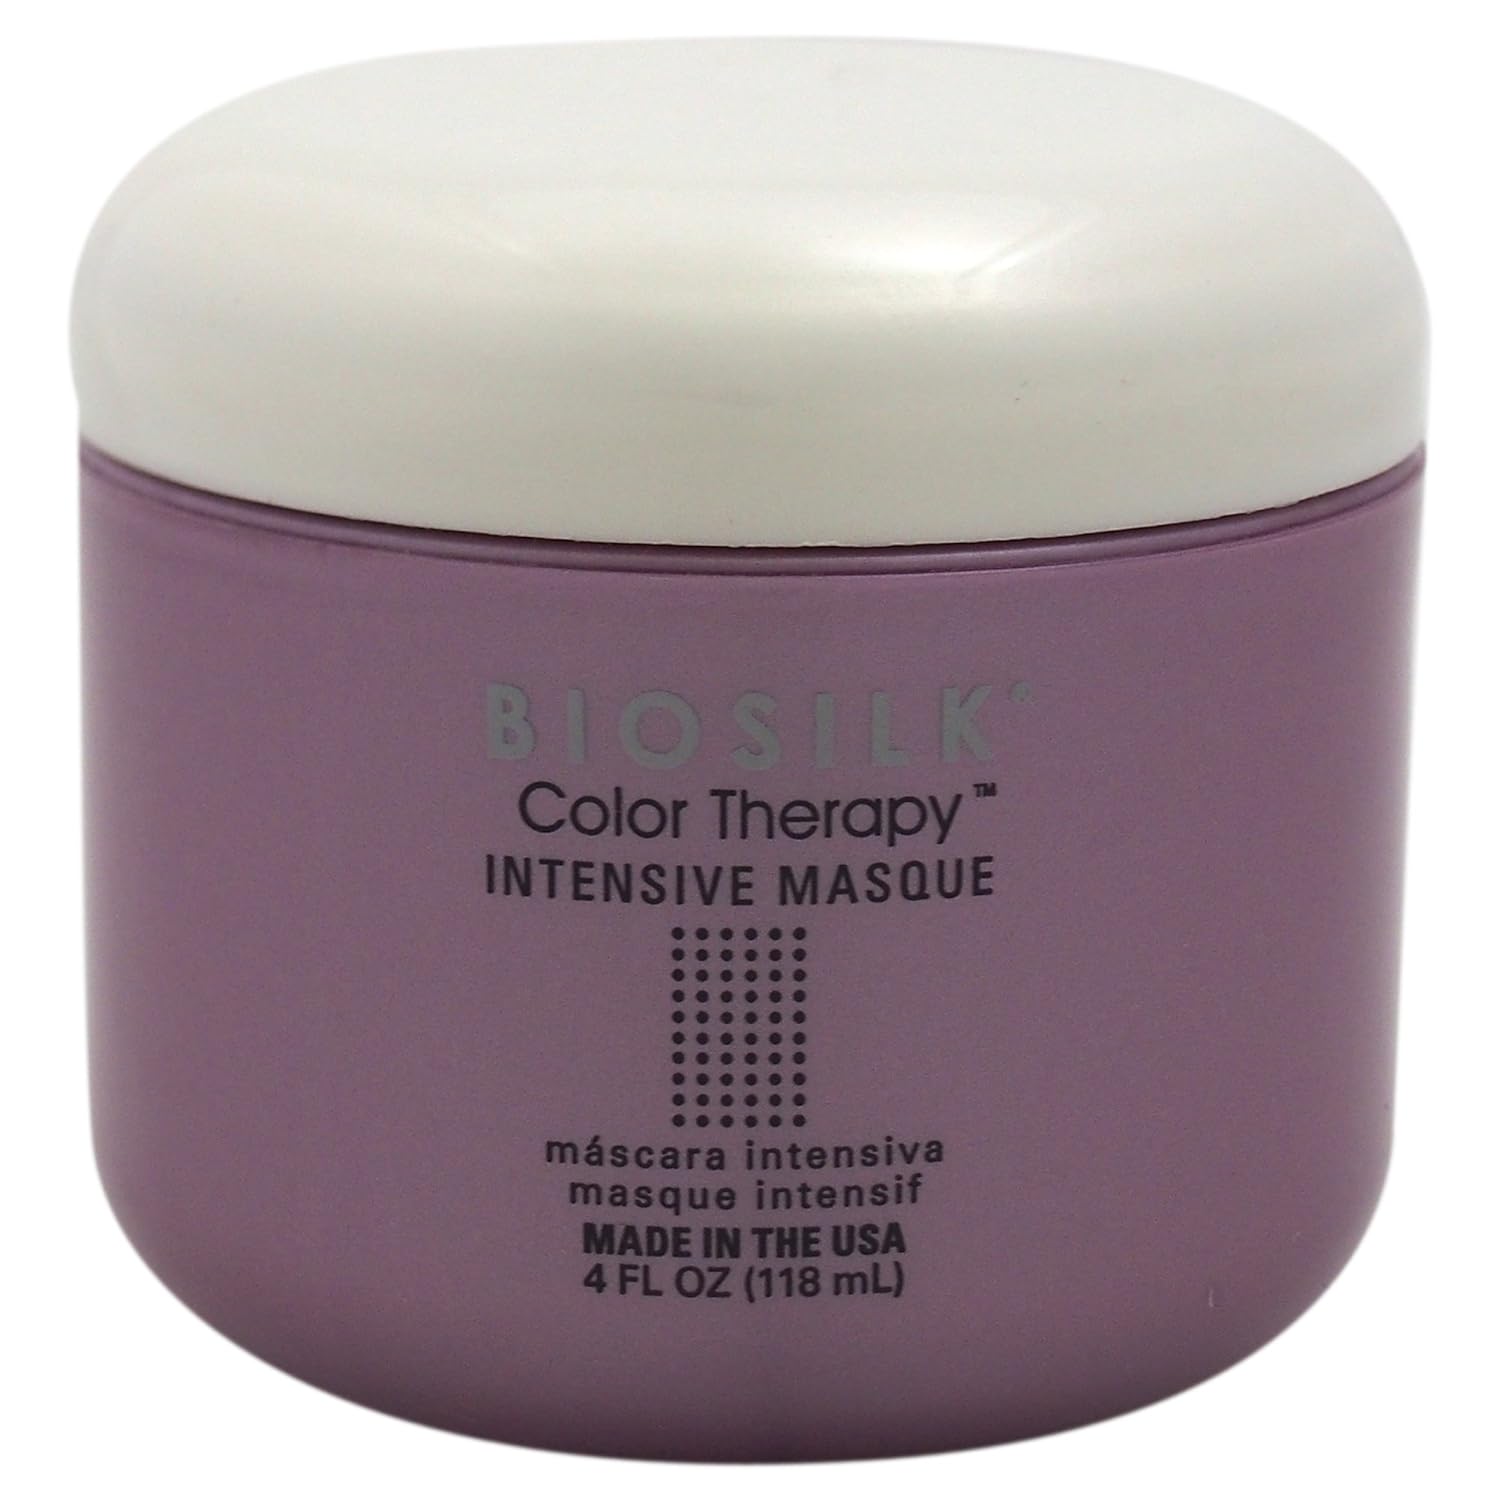 BioSilk Color Therapy Intensive Masque - Paraben and Gluten Free, 4 oz